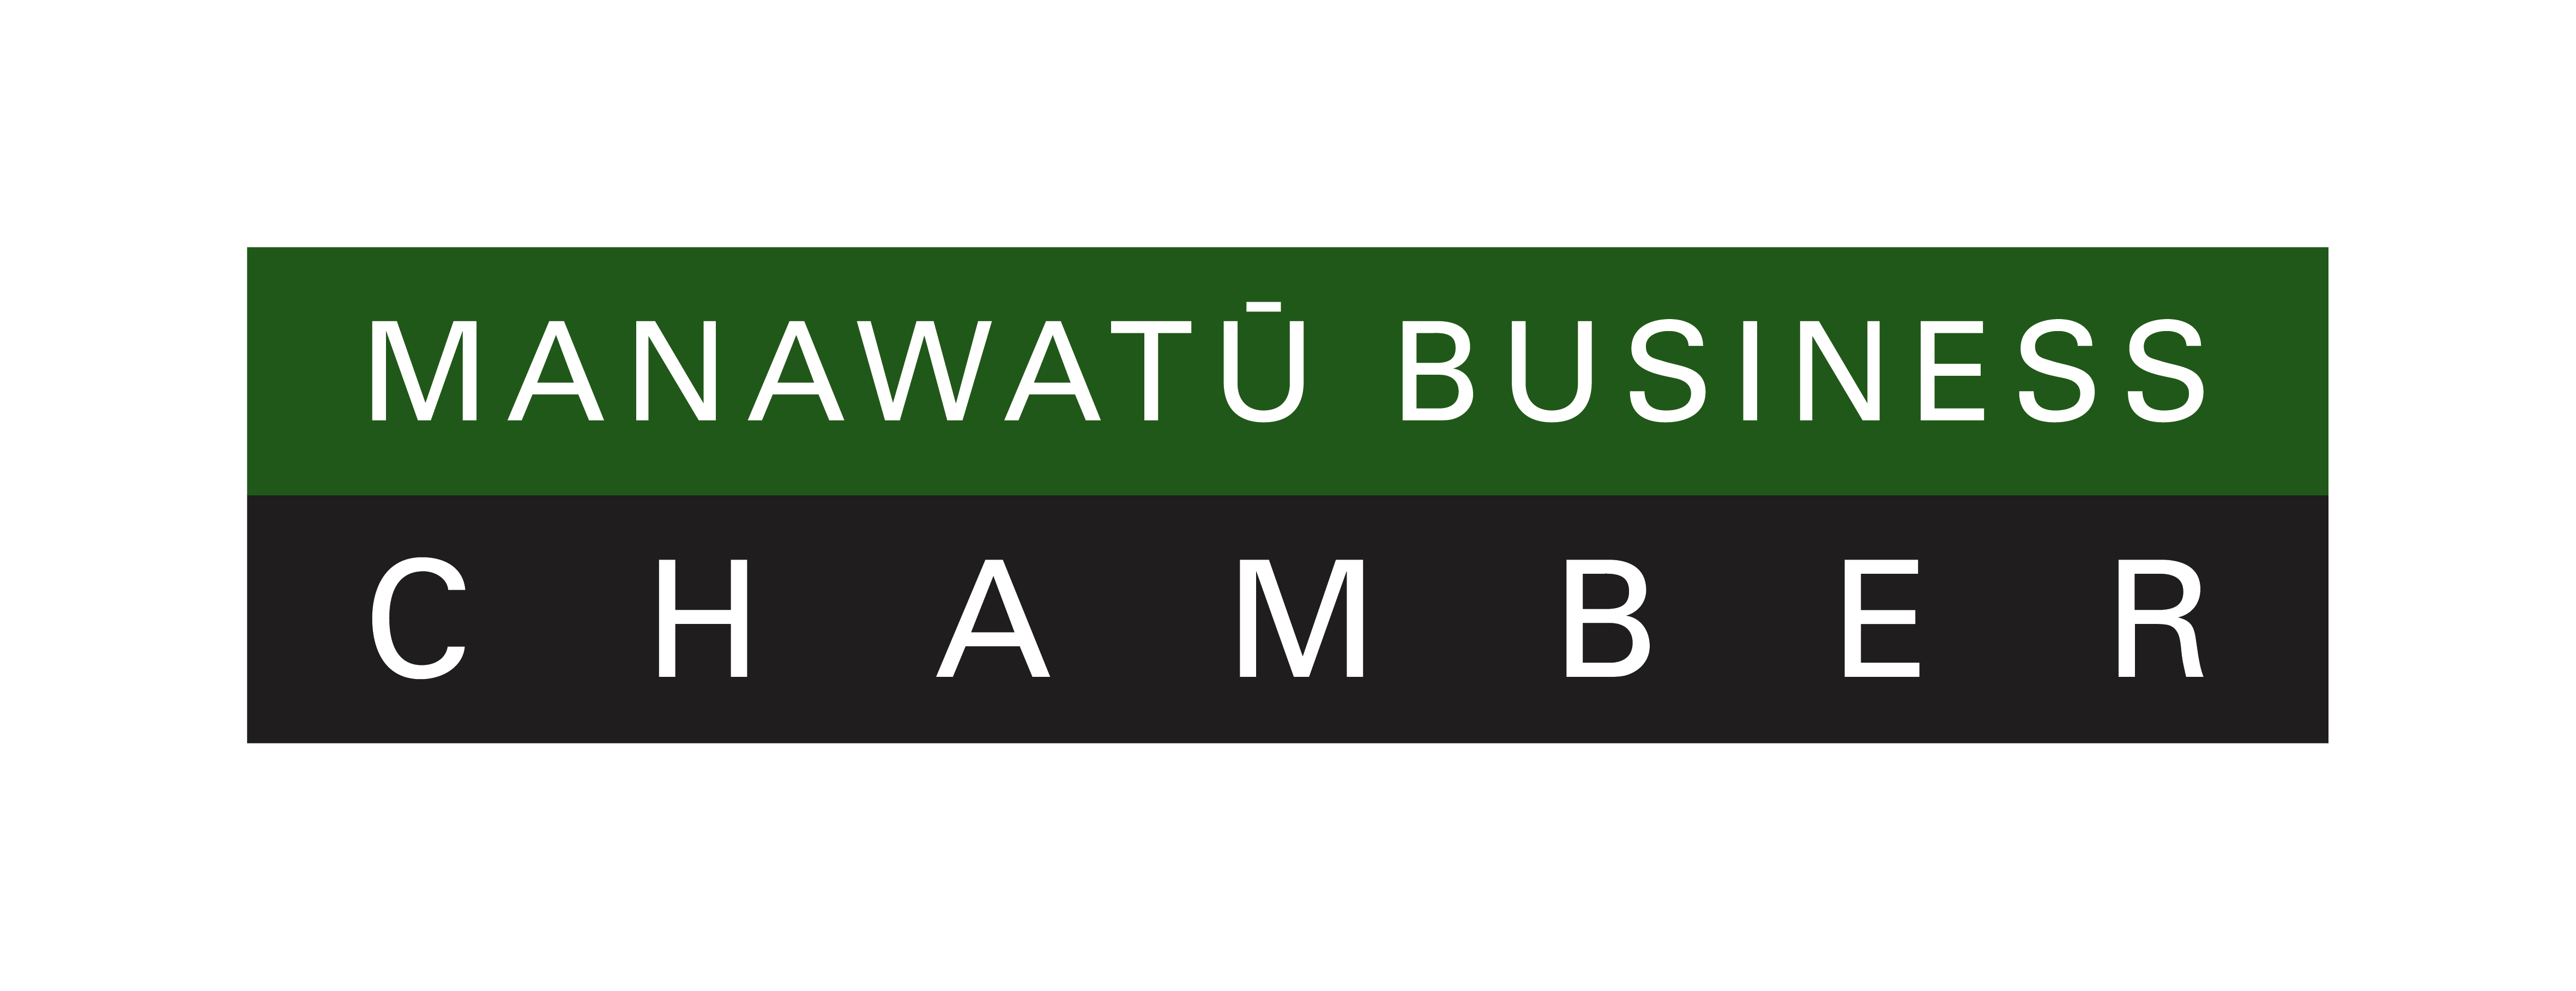 We are members of the Manawatu Business Chamber 